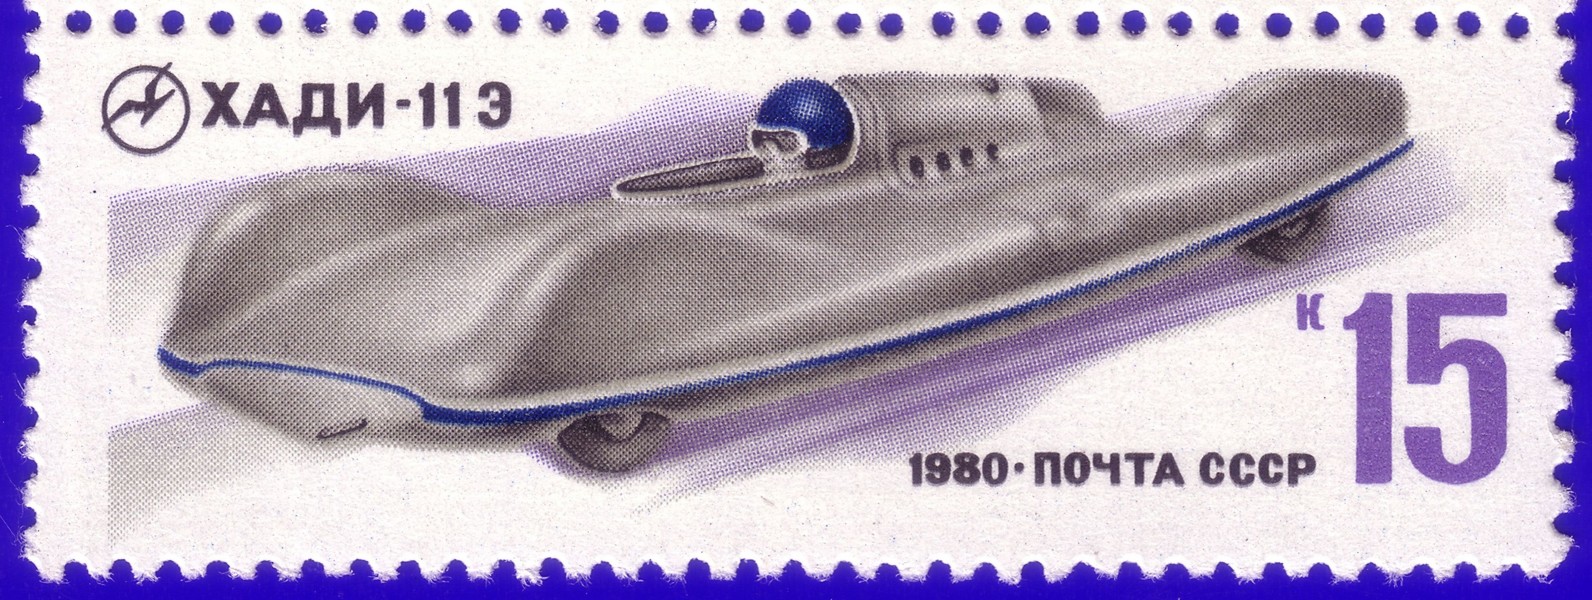 1980.ХАДИ-11Э